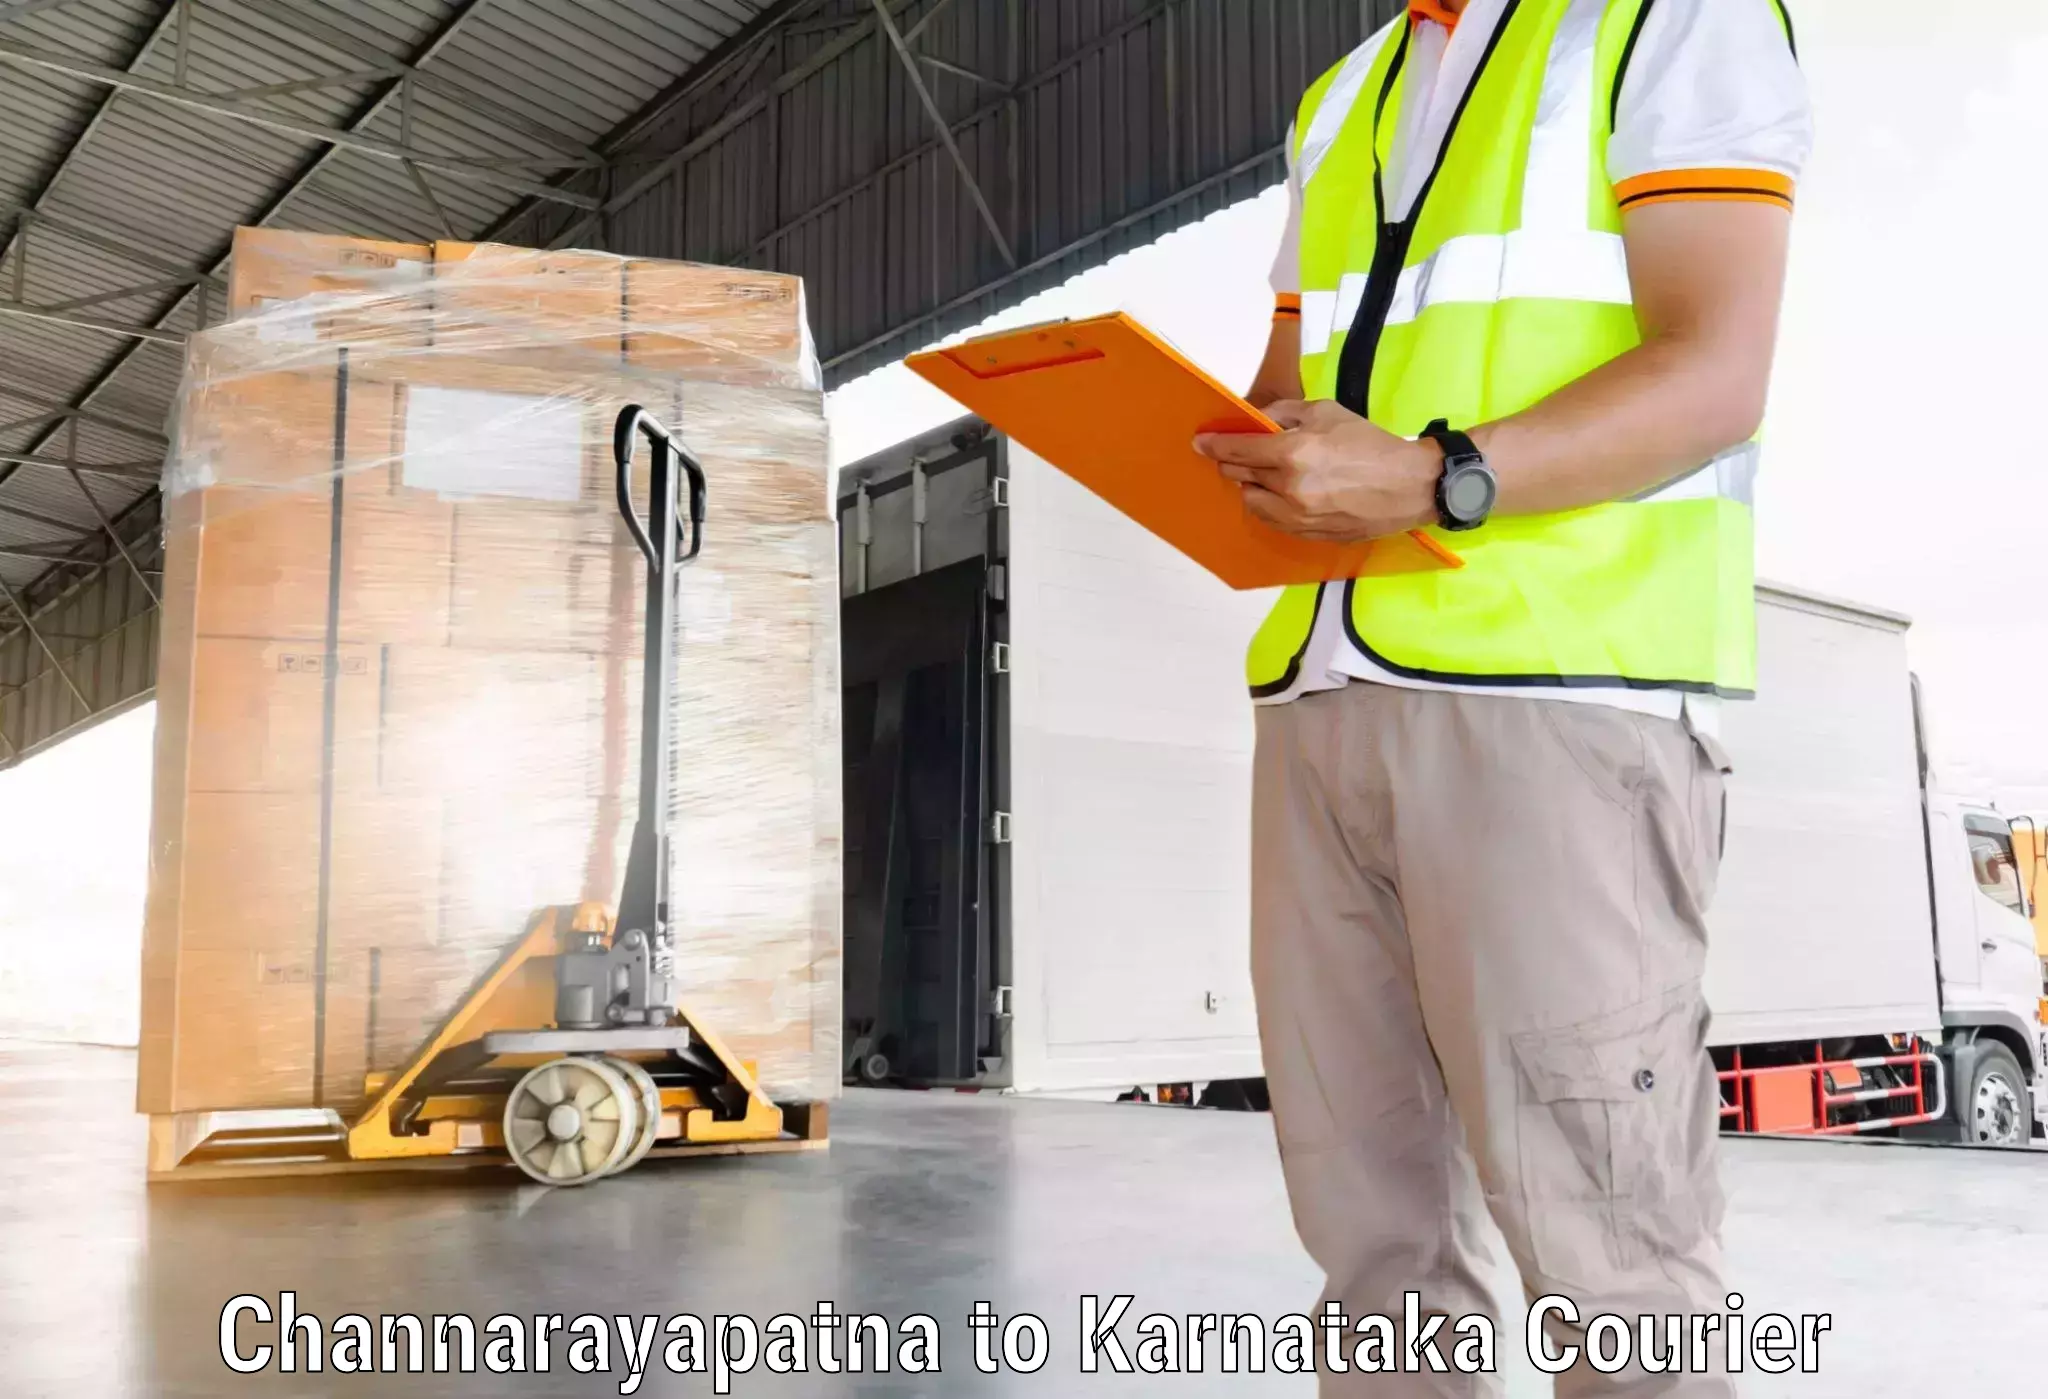 Courier service efficiency Channarayapatna to Hiriyur